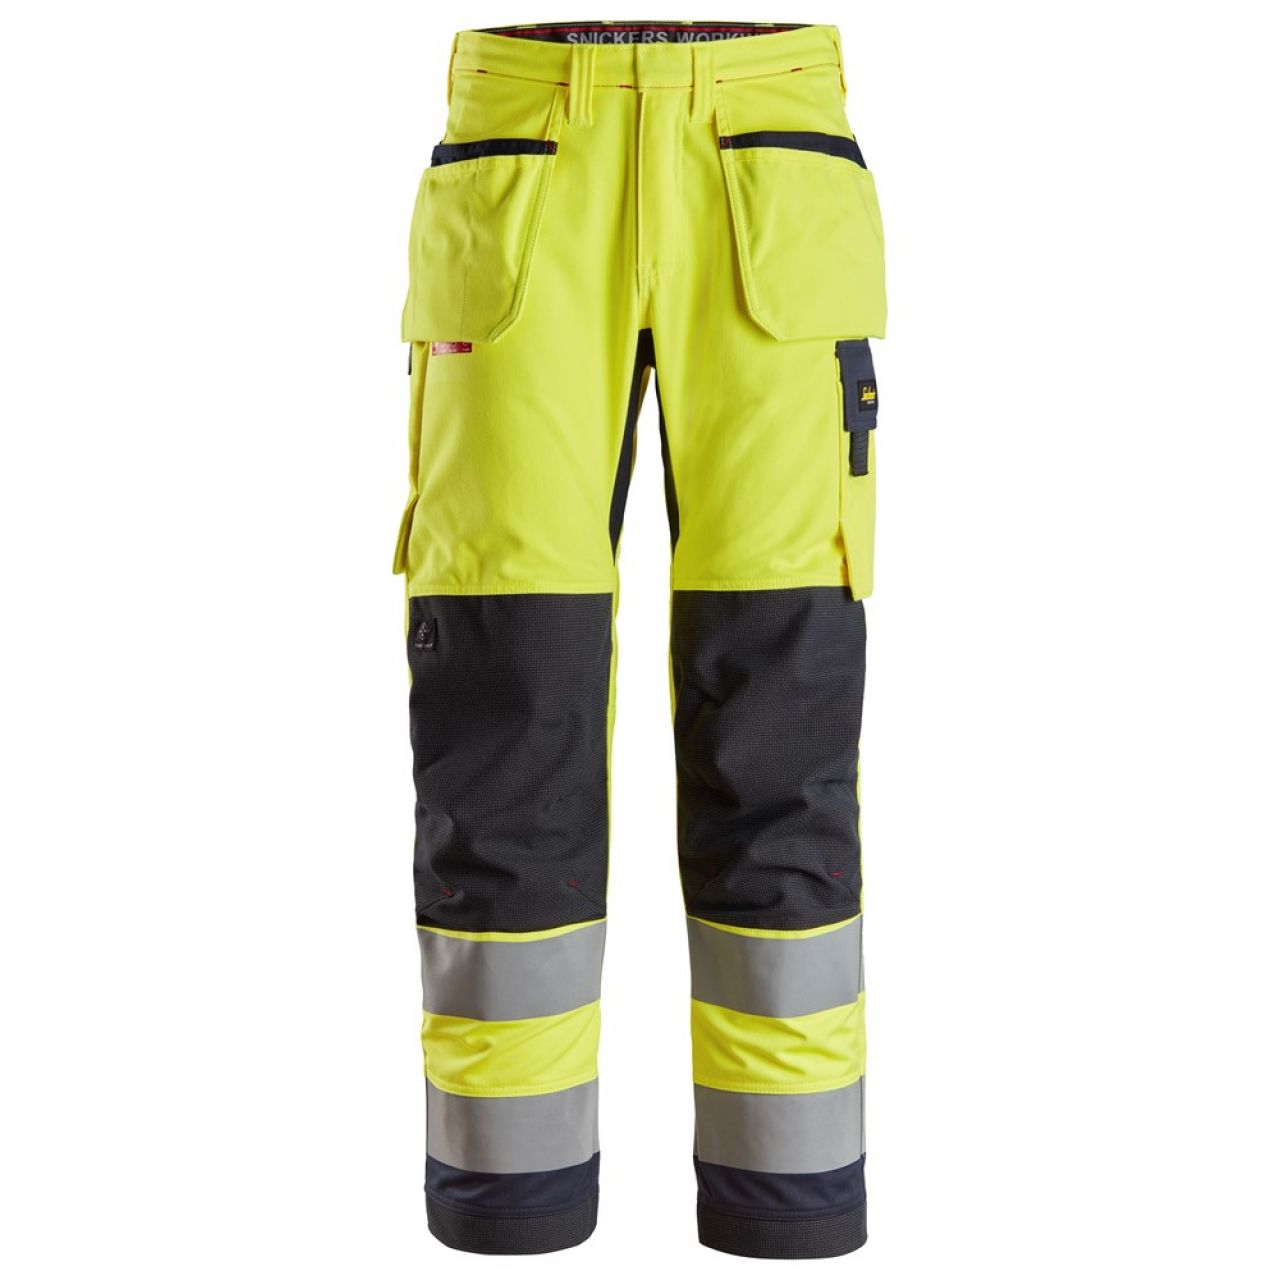 6260 Pantalones largos de trabajo de alta visibilidad clase 2 con bolsillos flotantes ProtecWork amarillo-azul marino talla 64